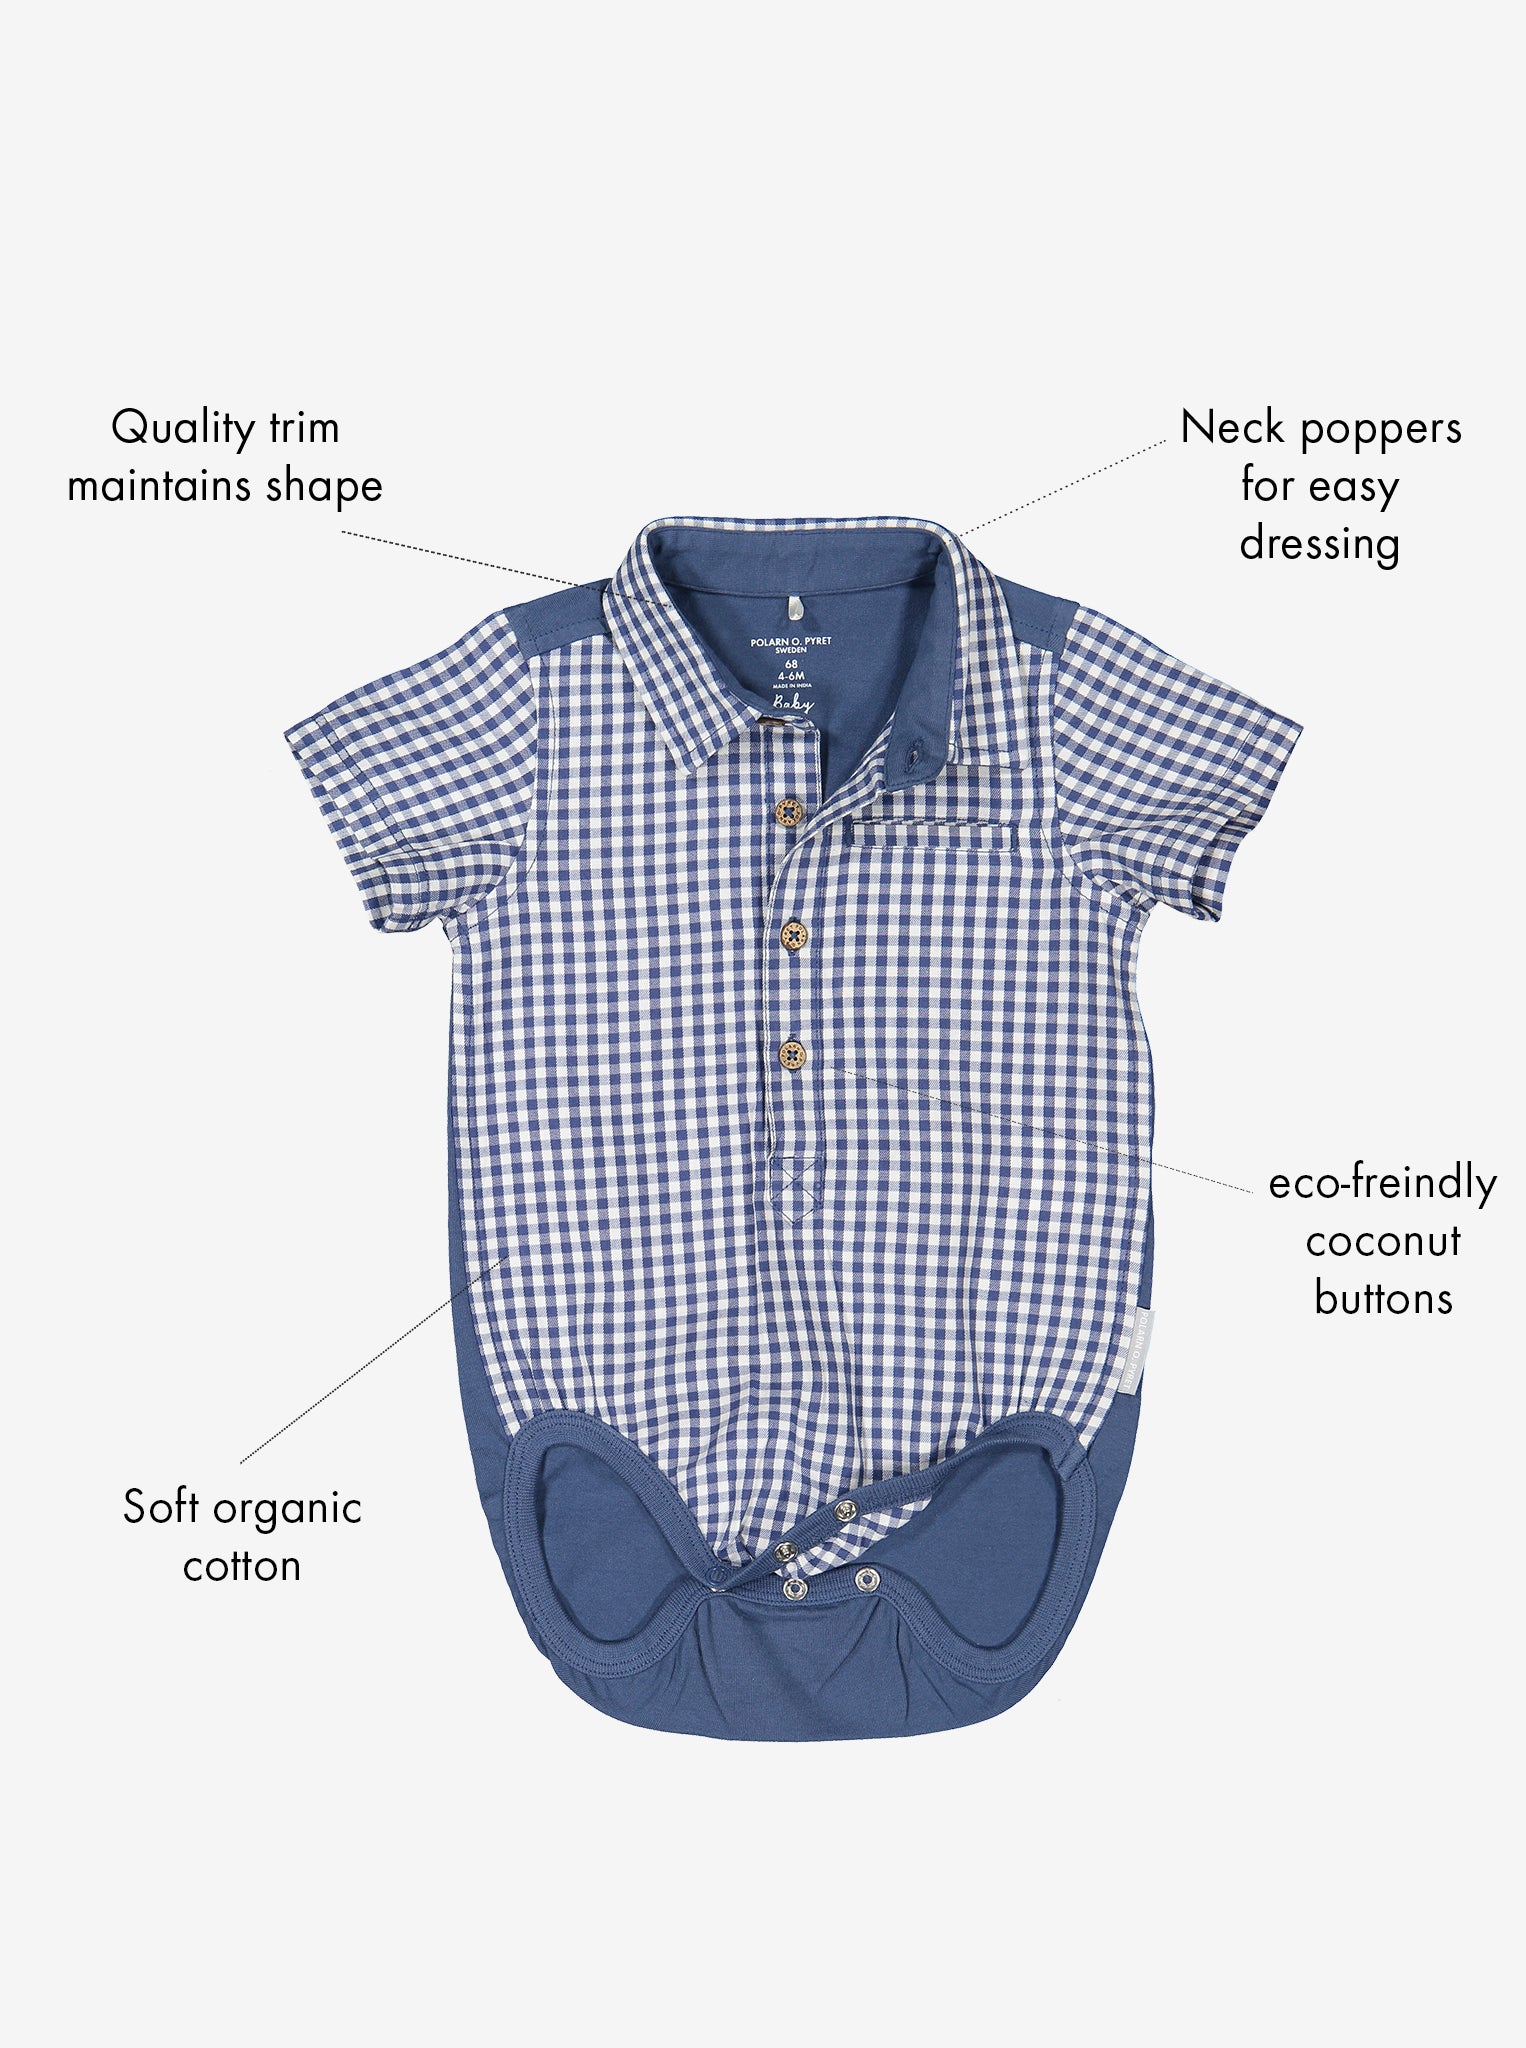 Checked Baby Shirt/Babygrow